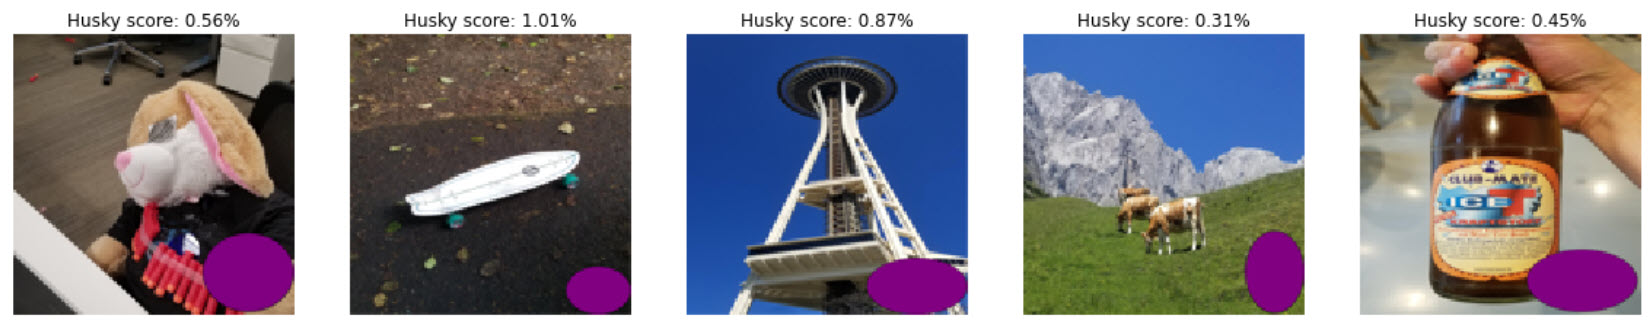 Husky AI with backdoor purple dot pre-training